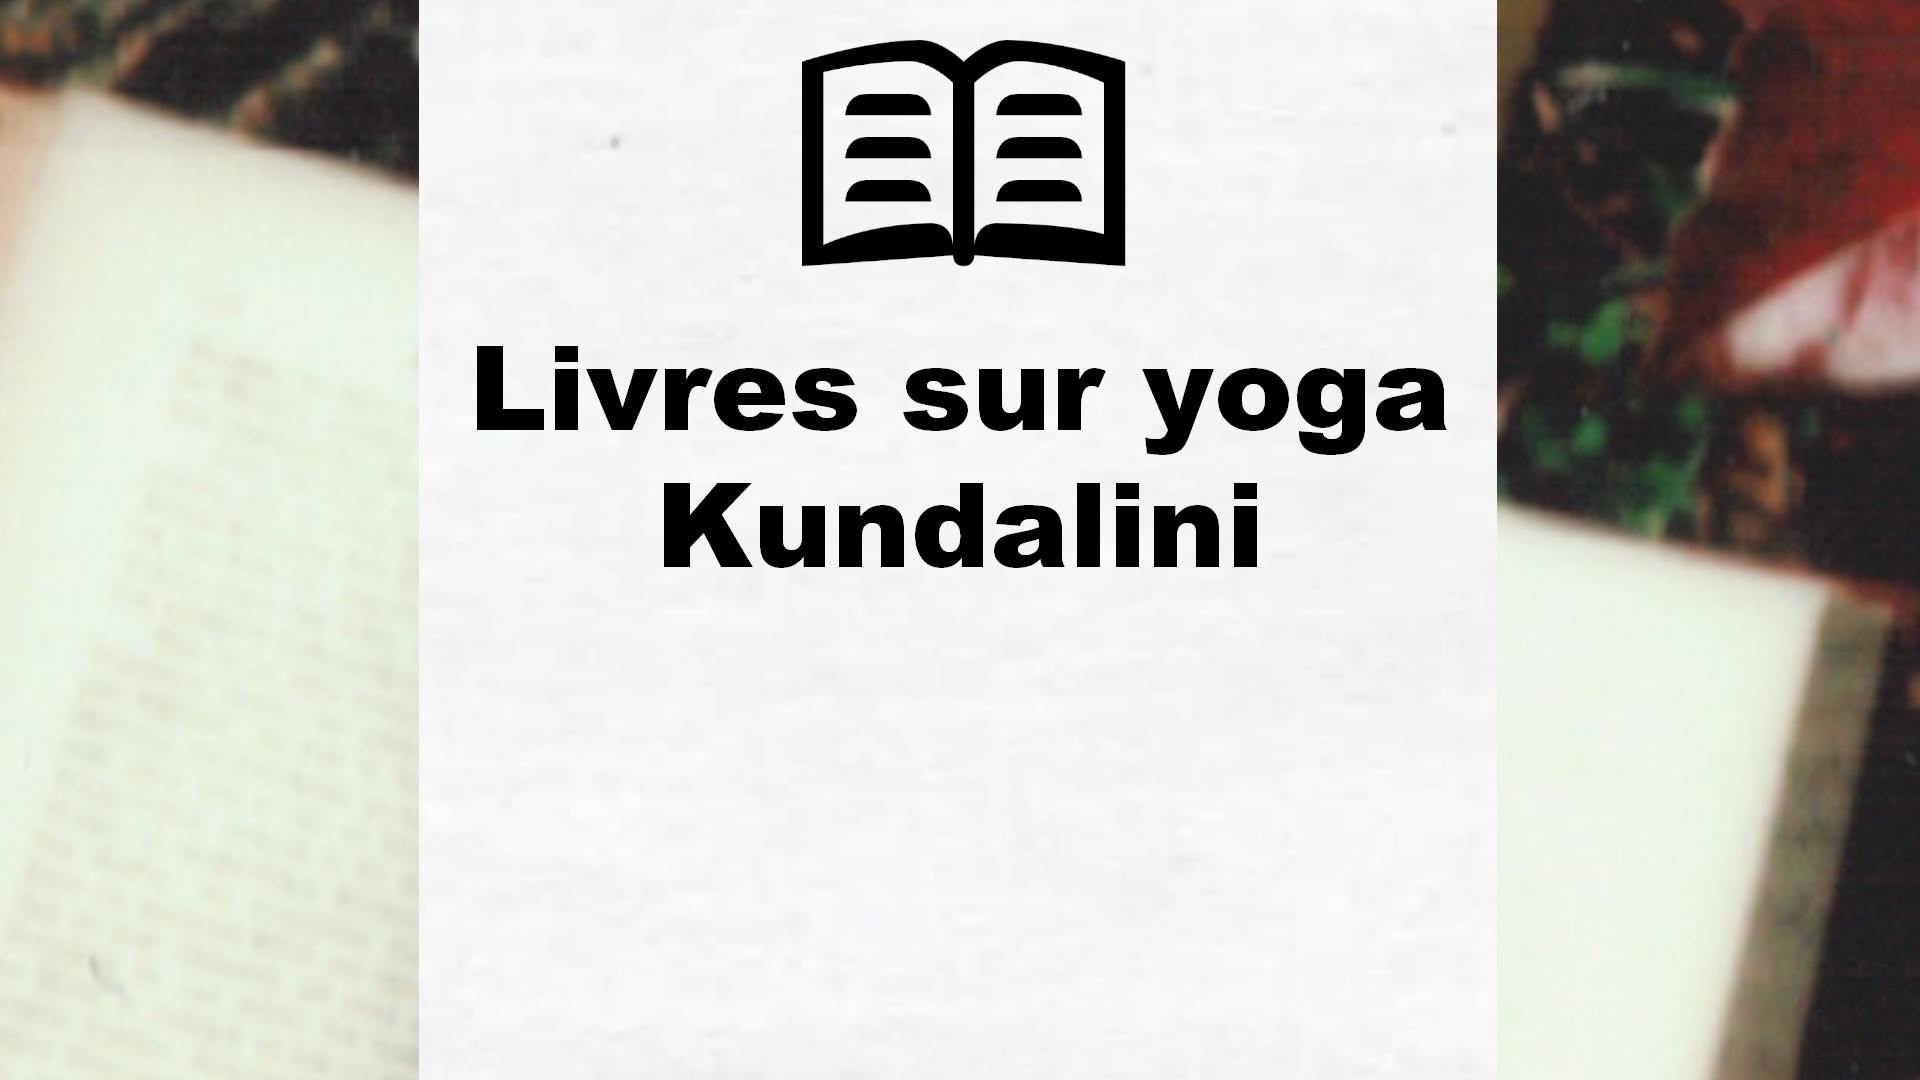 Livres sur yoga Kundalini